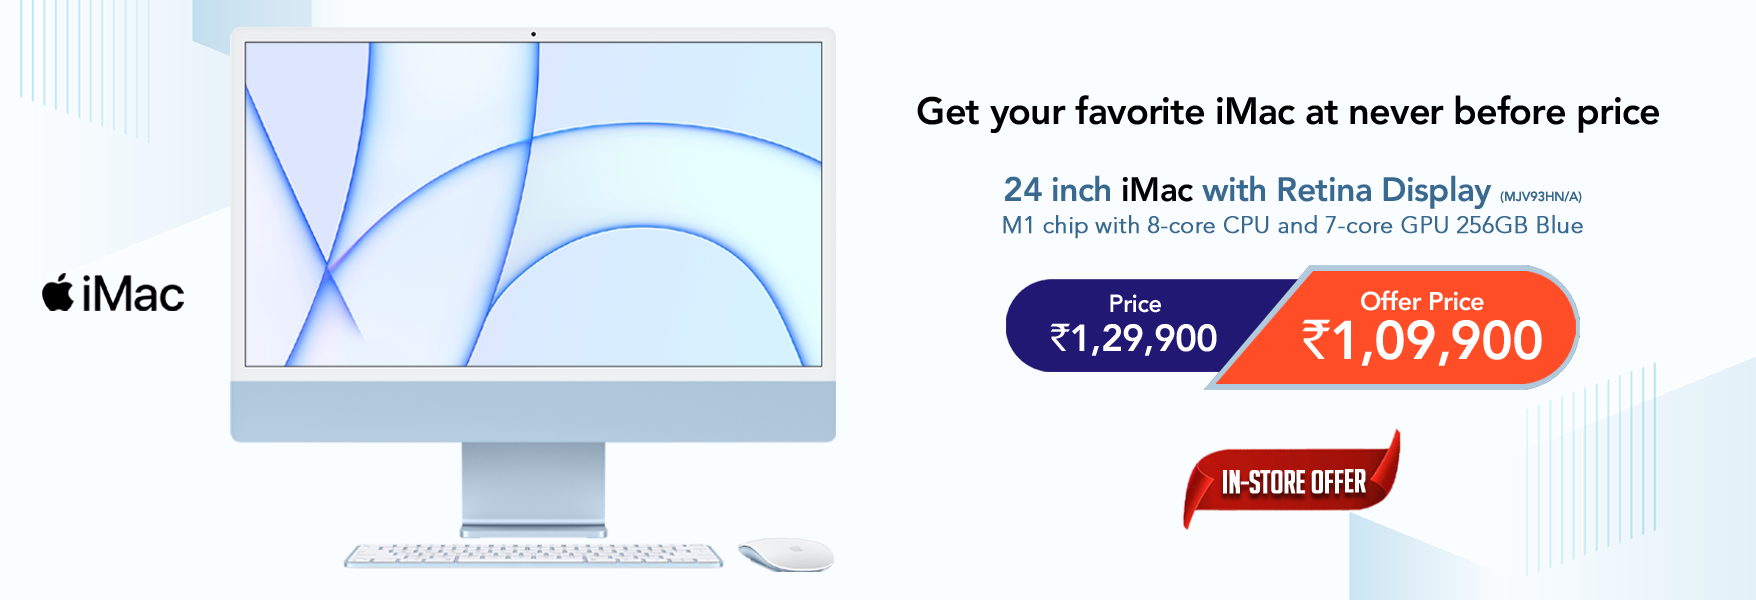 Get unbelievable discount on iMac M1 at imagine | Systematix Media online